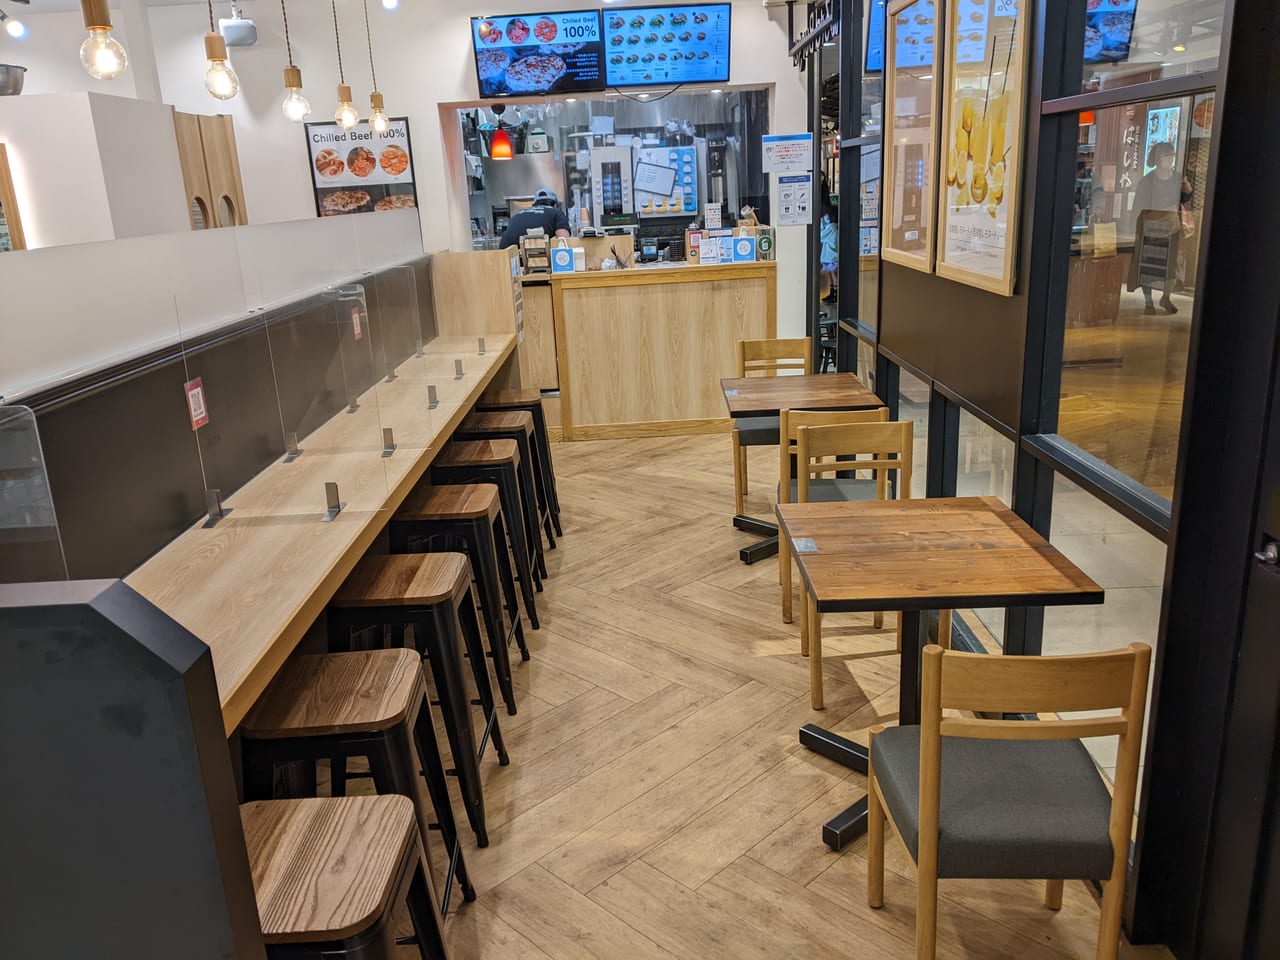 「the 3rd Burger 岡山一番街店」の店内